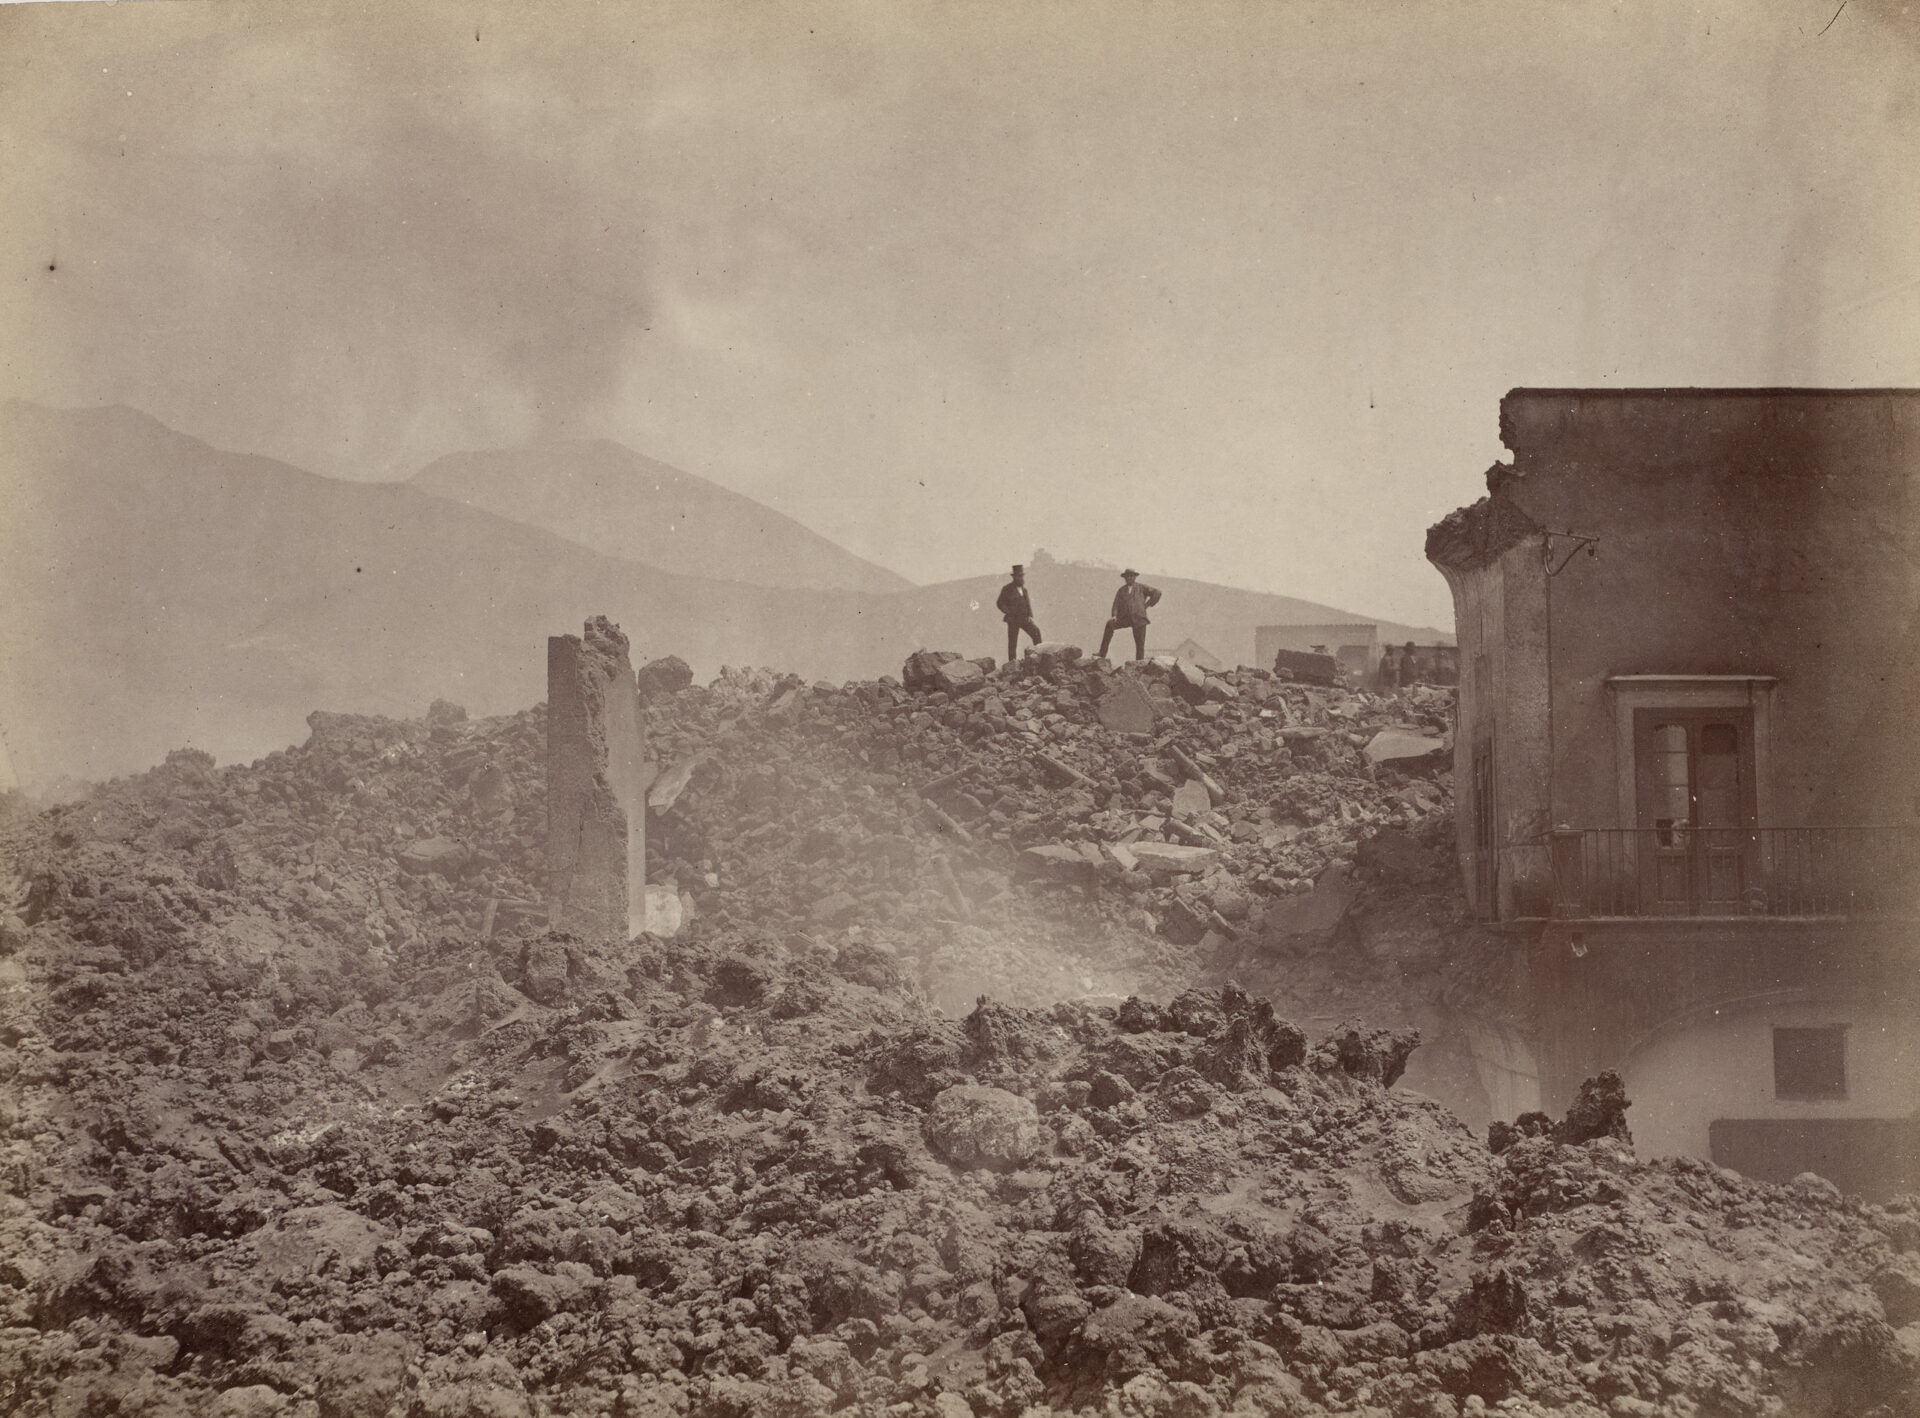 Giorgio Sommer, Neapel, Ruine in San Sebastiano al Vesuvio, 187273, Albuminpapier auf Karton, Städel Museum, Frankfurt am Main, Public Domain